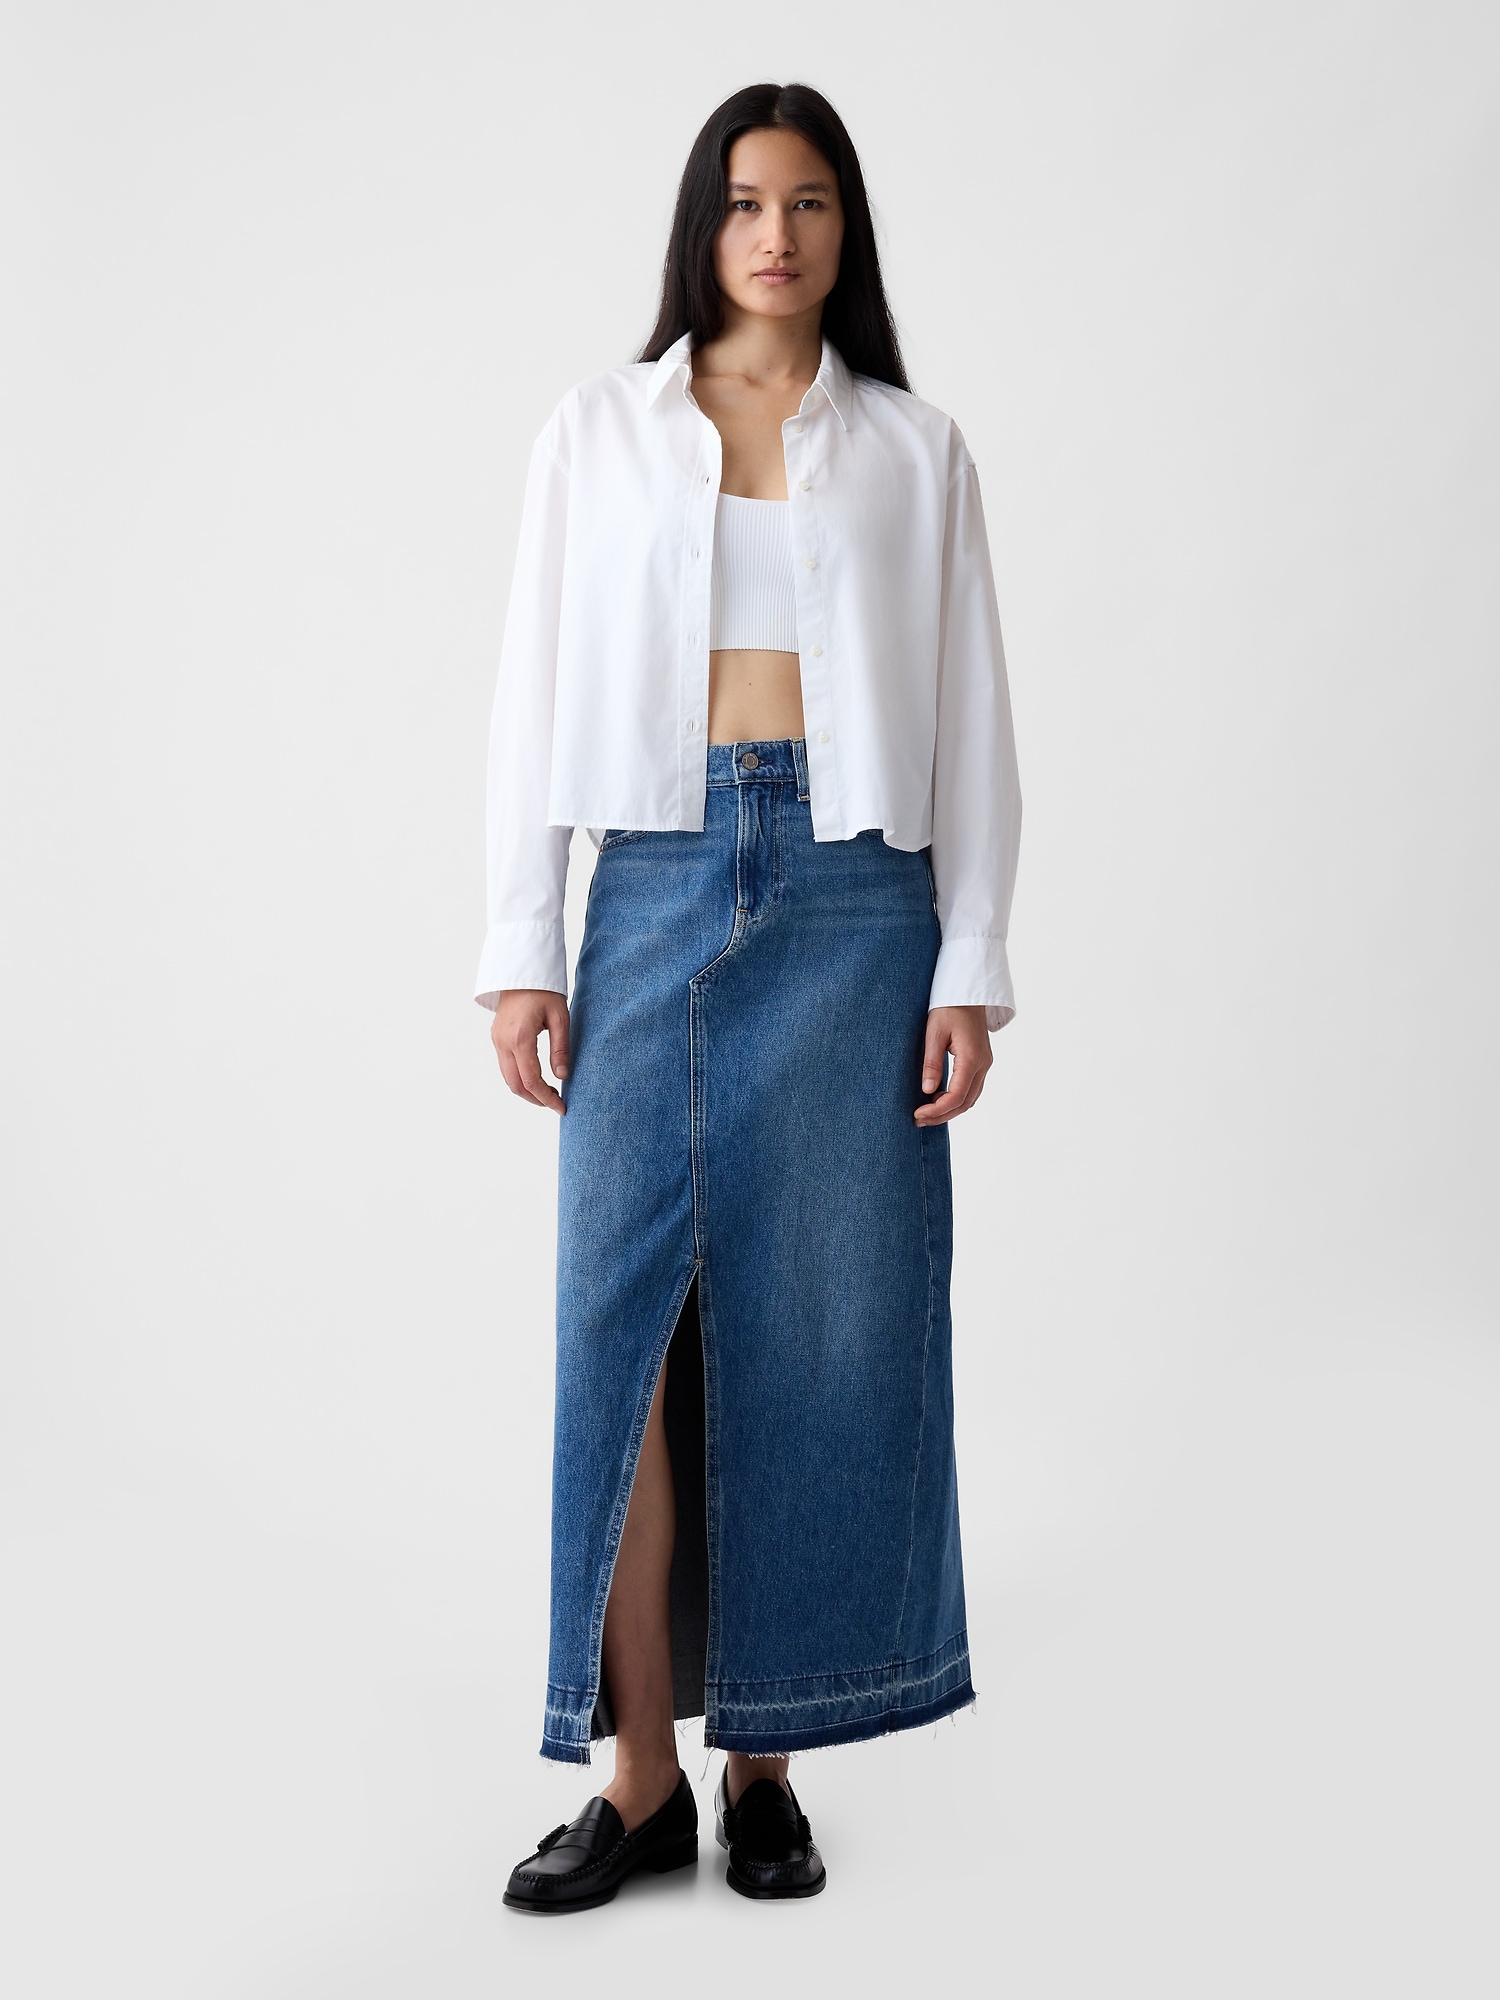 WUARI Skirt High Waist Denim Skirt for Women Summer Short Skirt Woman Skirts  (Color : White, Size : L) : Buy Online at Best Price in KSA - Souq is now  Amazon.sa: Fashion